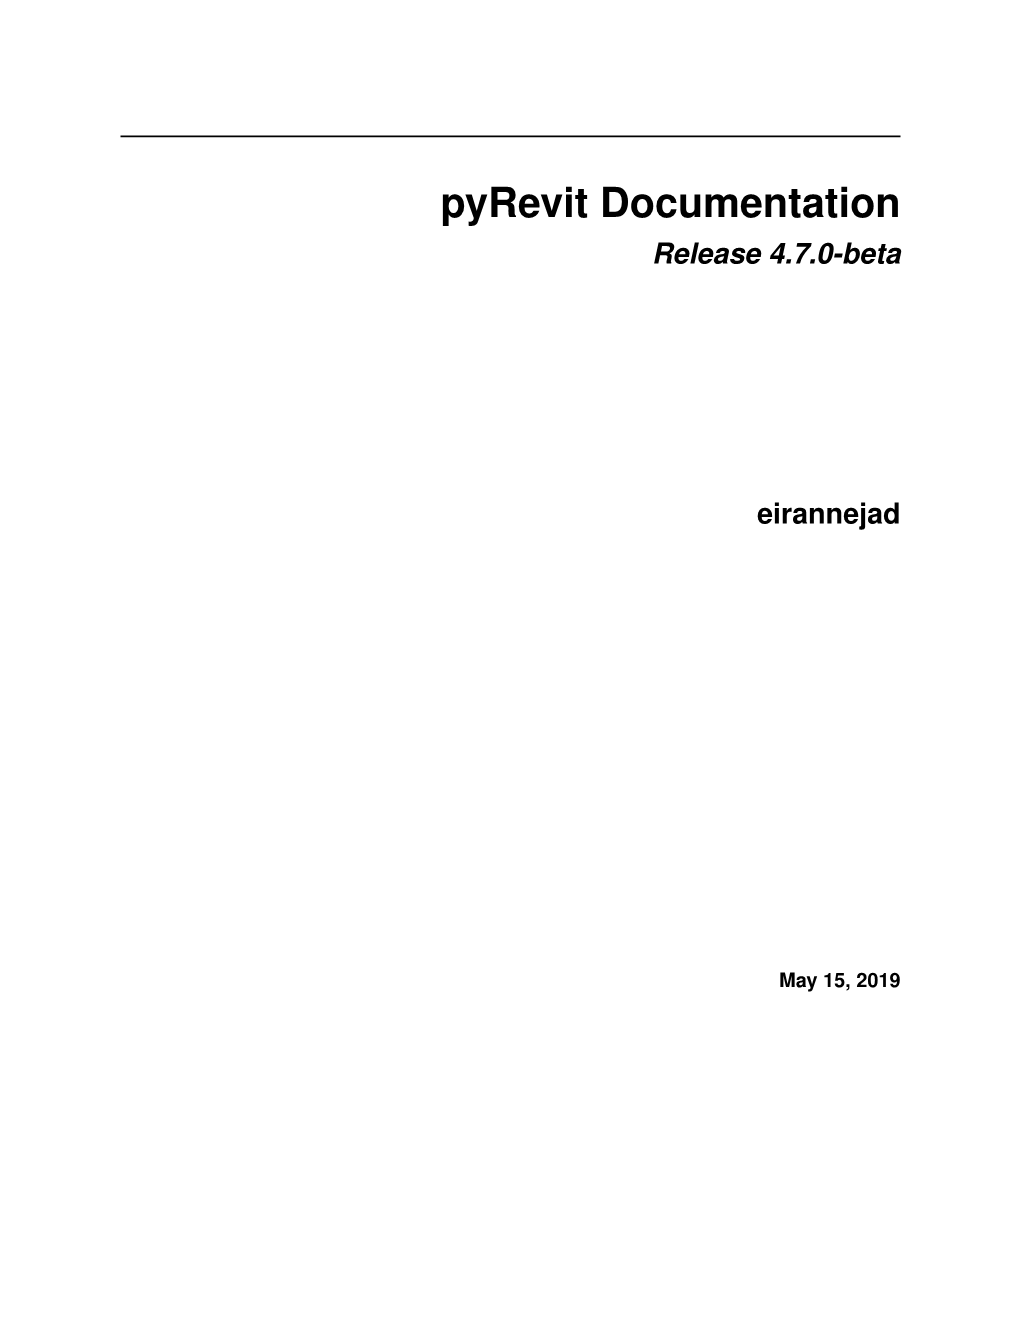 Pyrevit Documentation Release 4.7.0-Beta